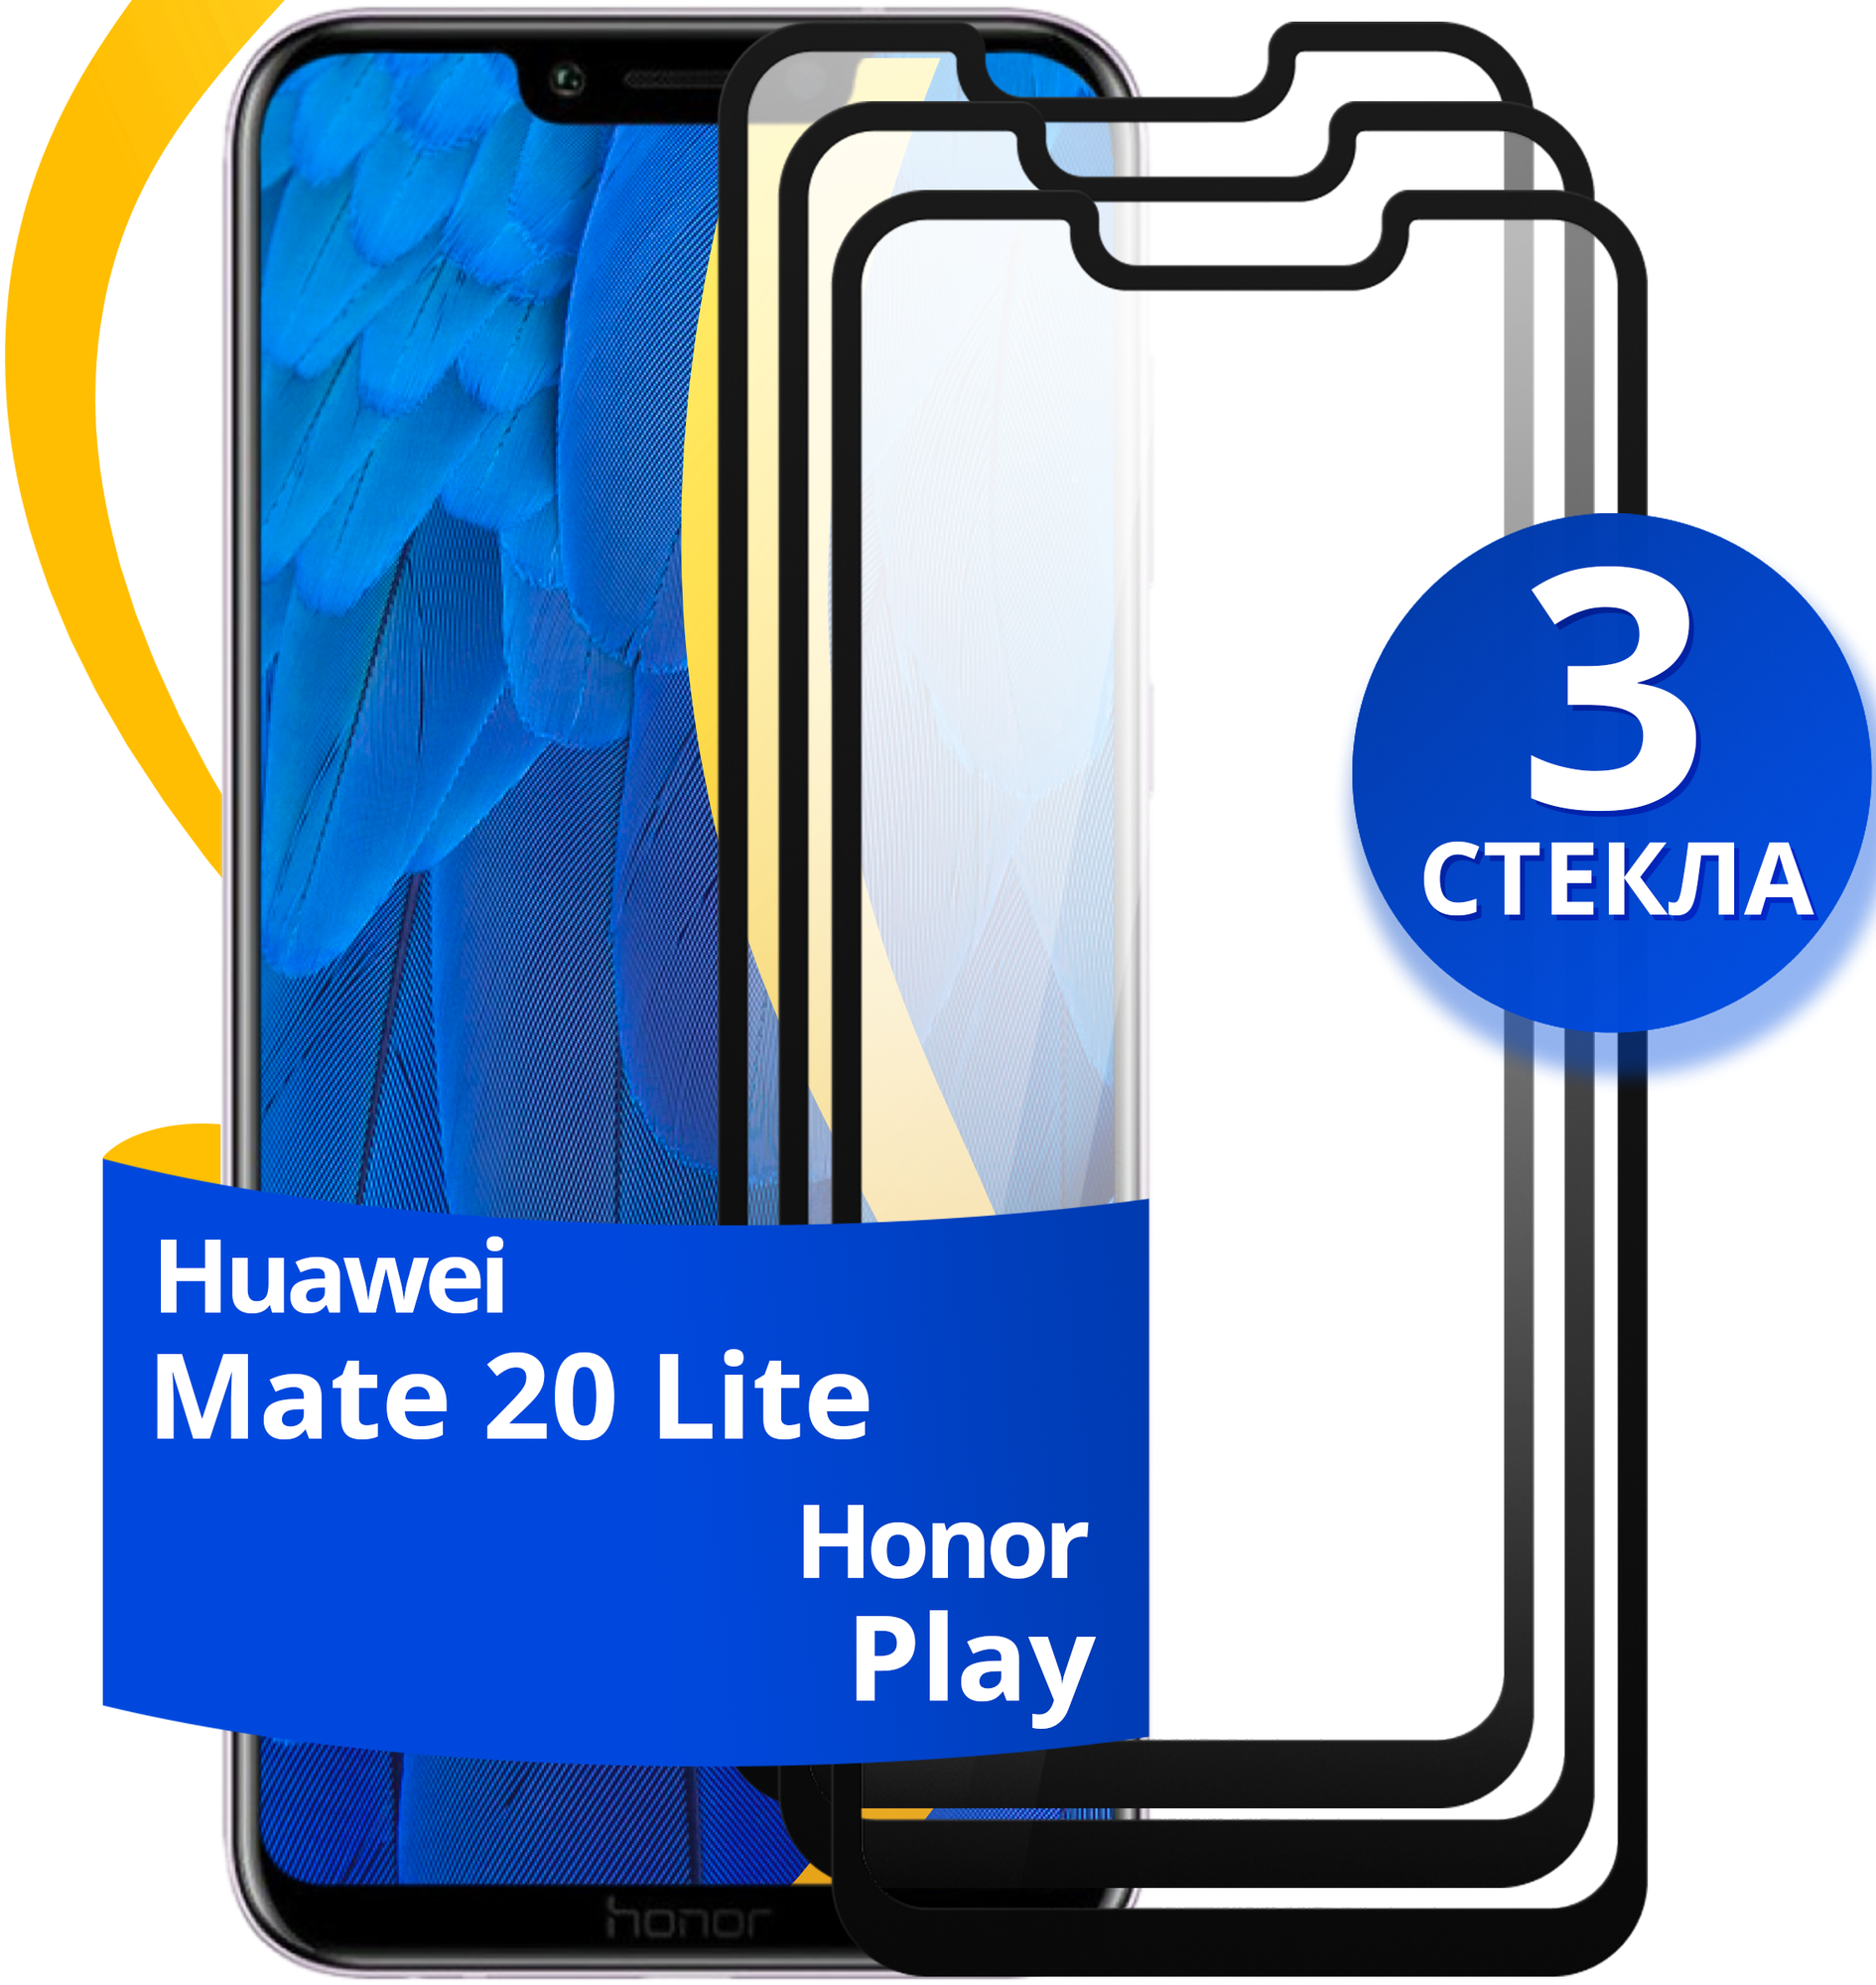 Комплект 2 шт защитное стекло для телефона Huawei Mate 20 Lite и Honor Play / Набор противоударных стекол на смартфон Хуавей Мате 20 Лайт и Хонор Плей